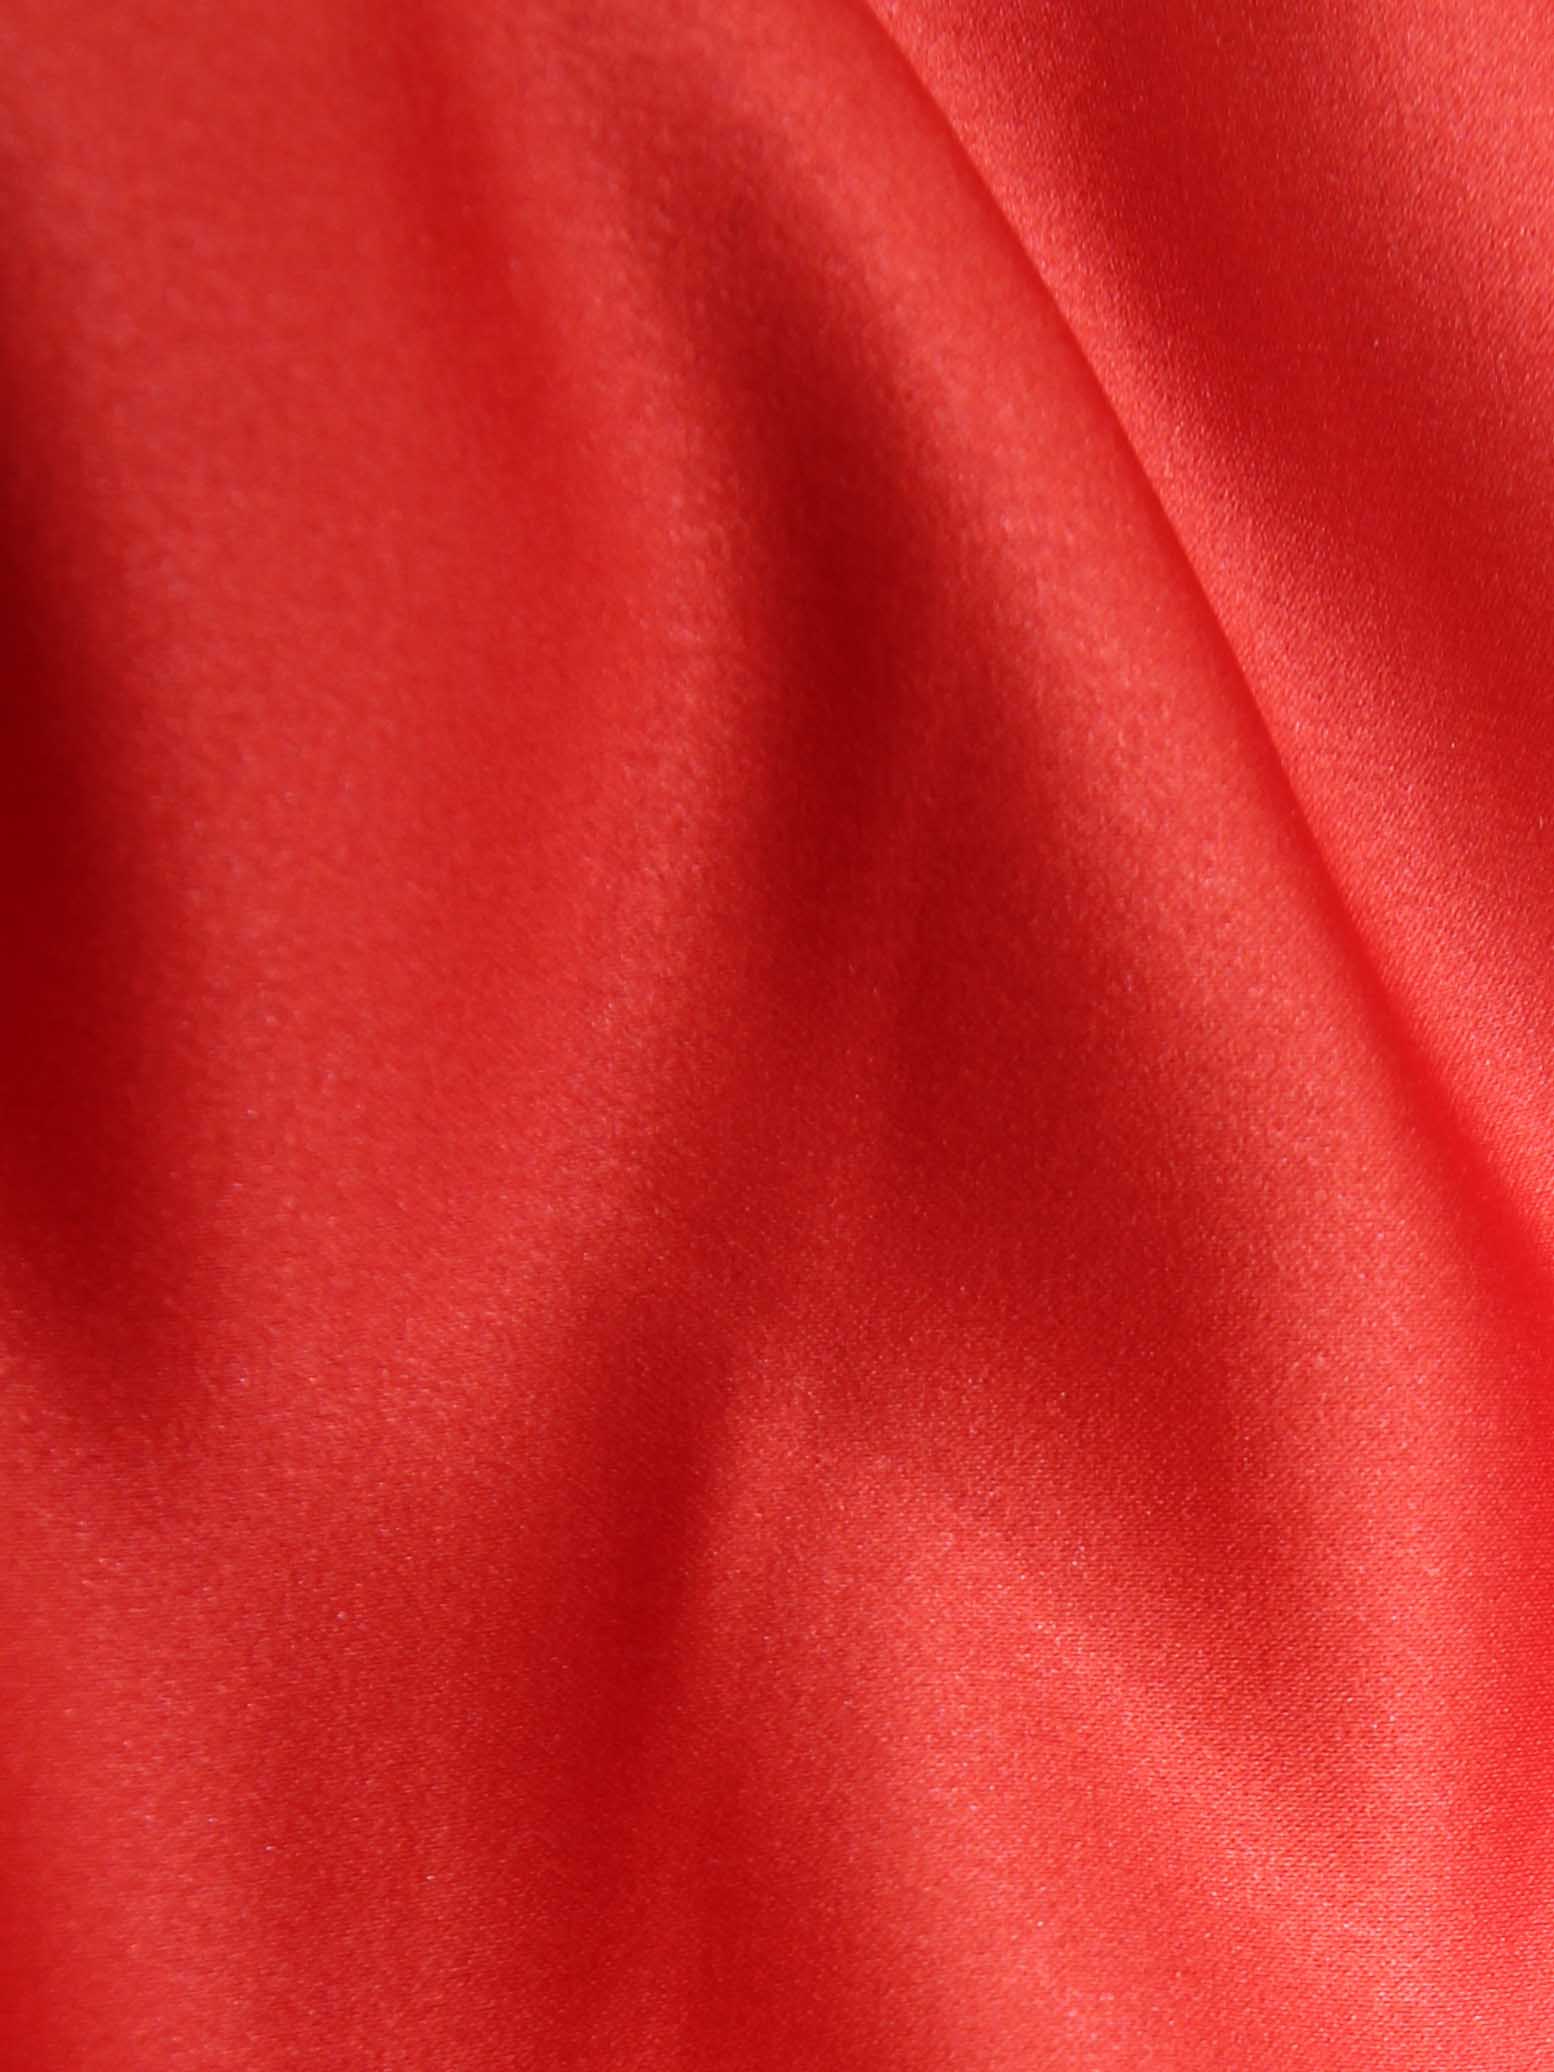 Bright Red Silk Duchess Satin Fabric